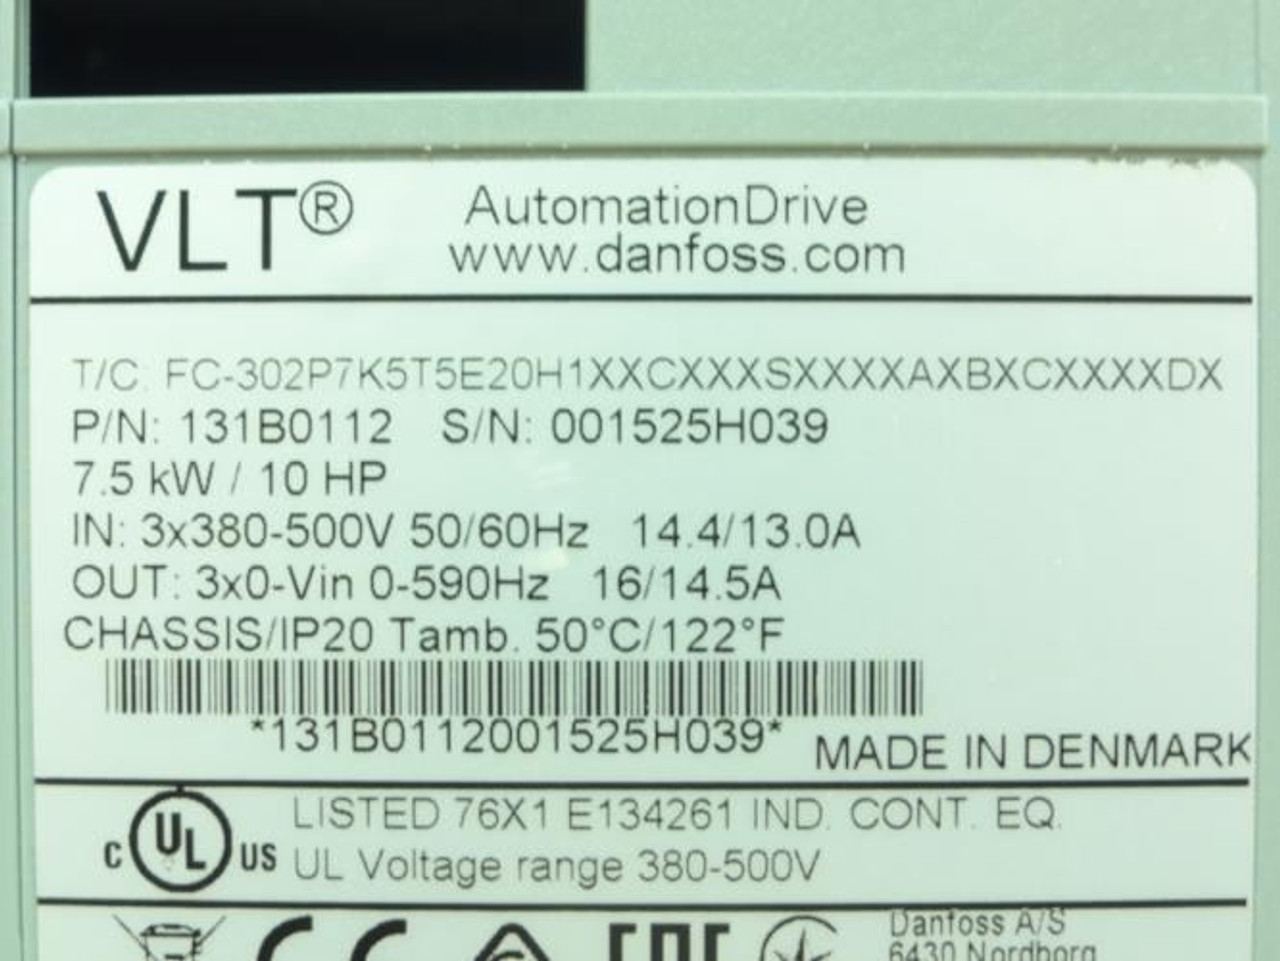 Danfoss 131B0112; VLT Automation Drive; 10HP/7.5Kw; 380-500VAC